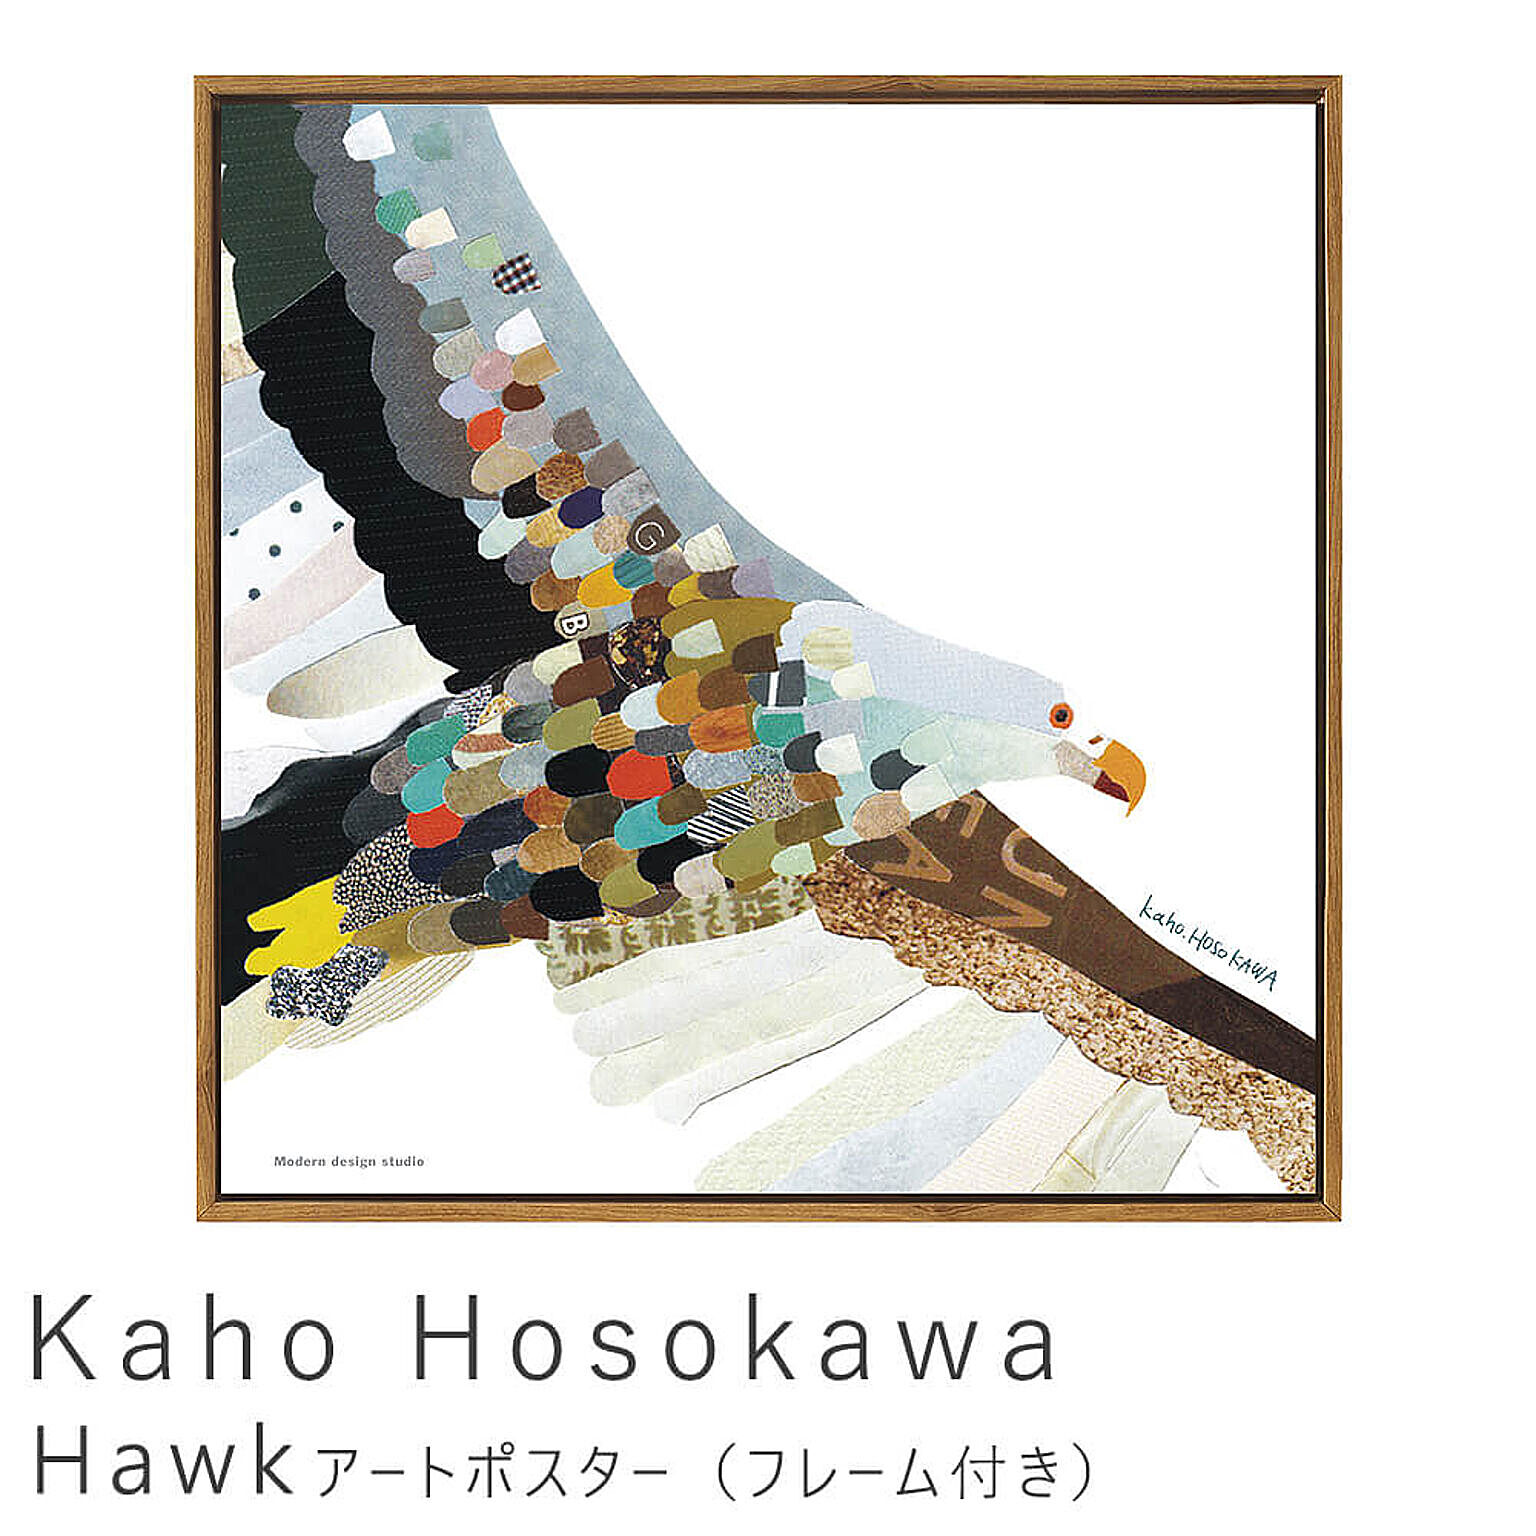 Kaho Hosokawa（細川 華歩） Hawk アートポスター（フレーム付き） m11941